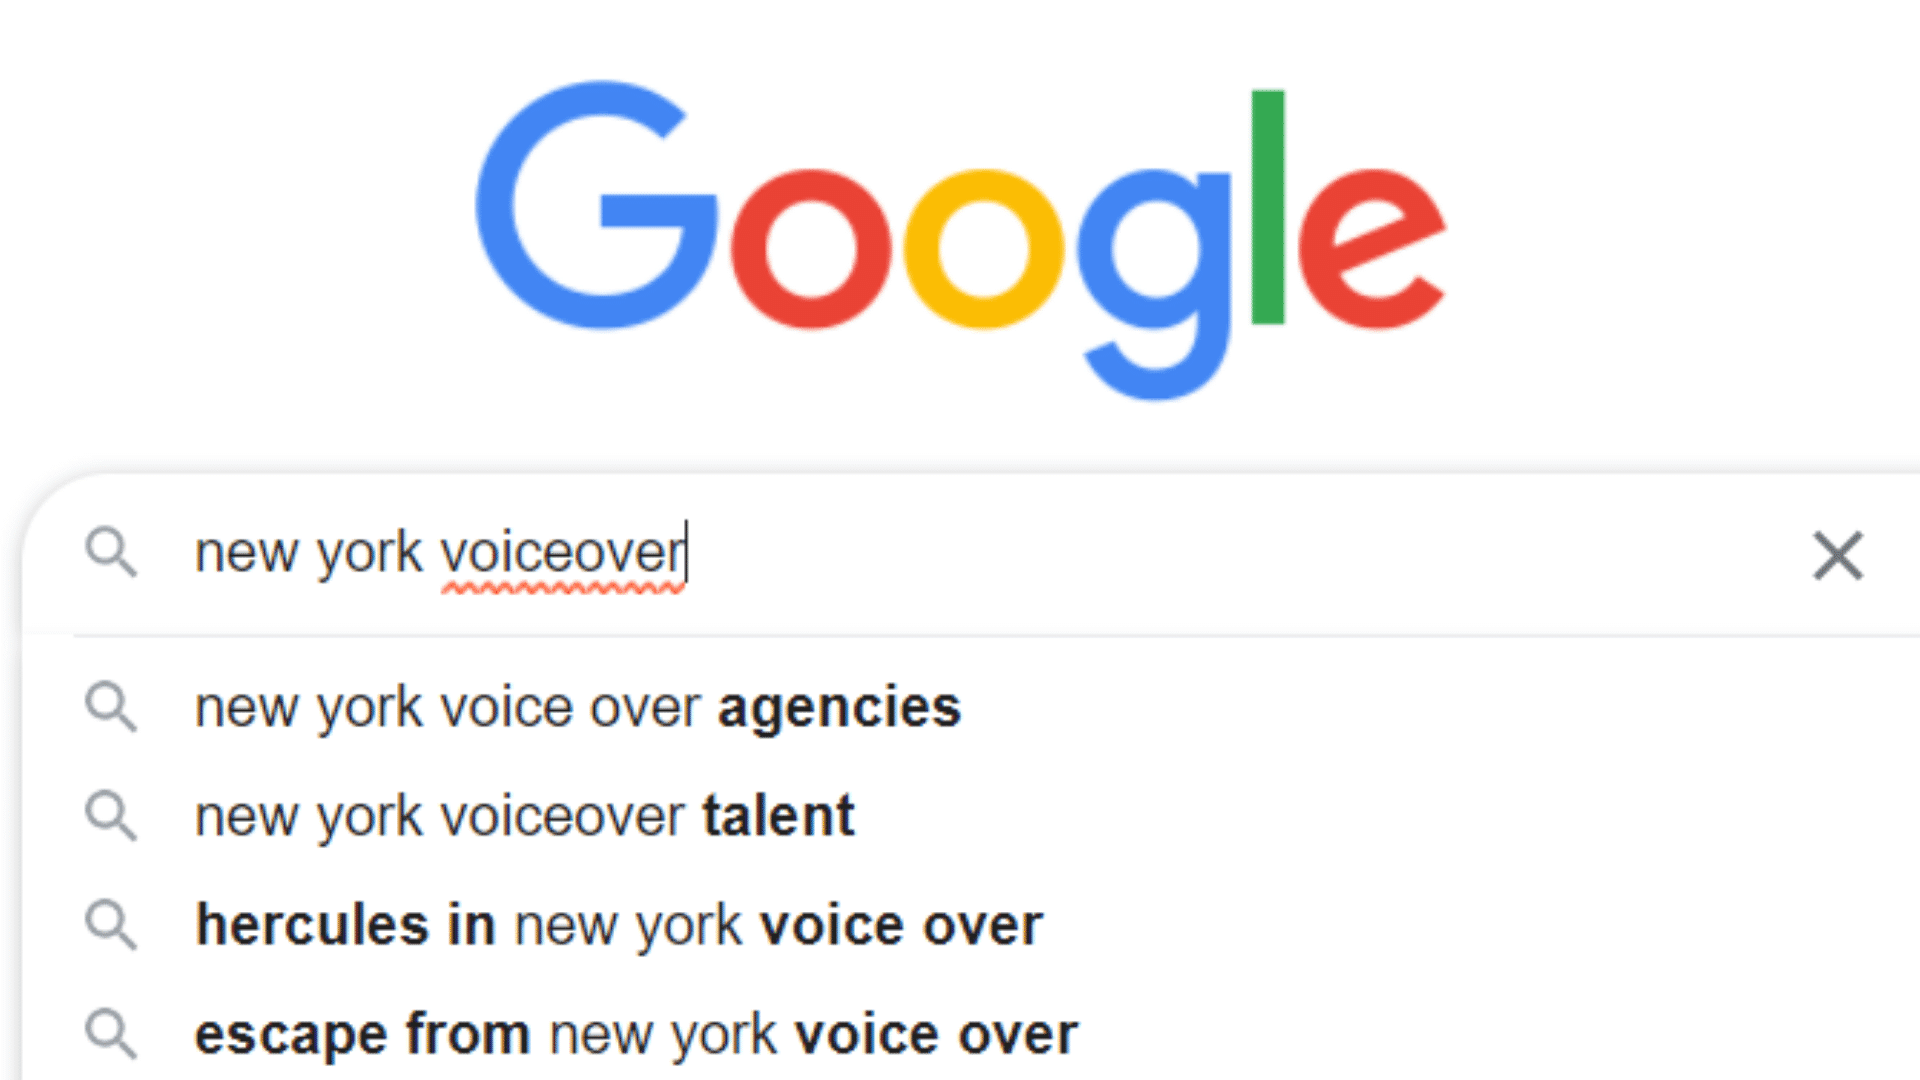 Google Autosuggest Example New York Voiceover (1920x1080)